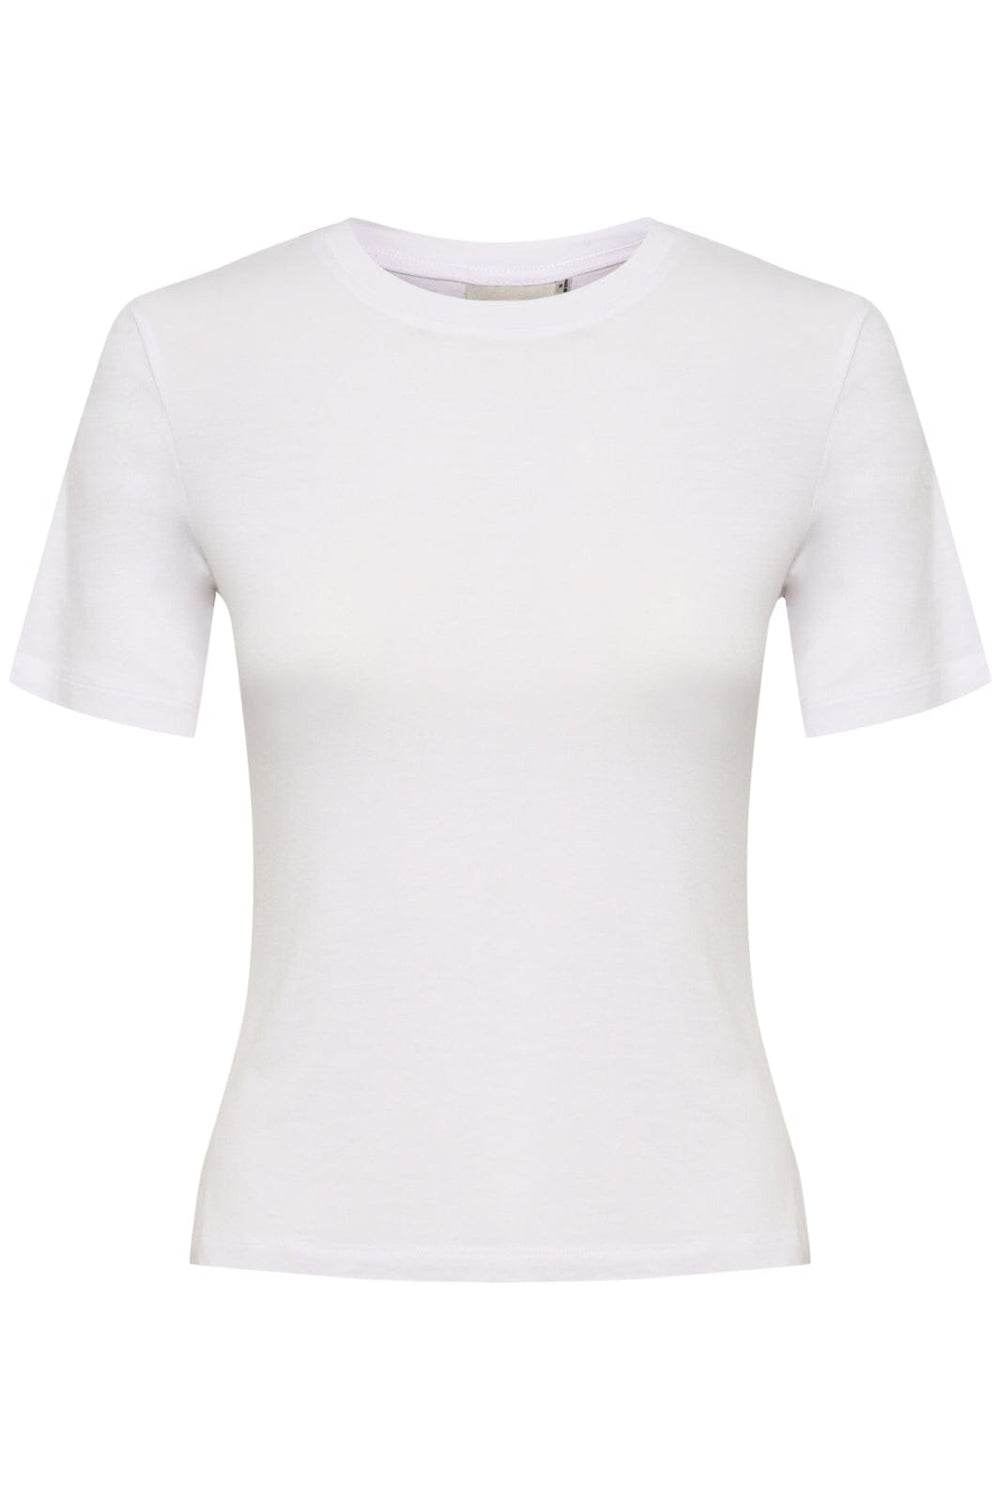 Gestuz - DamyGZ tee - Bright White T-shirts 